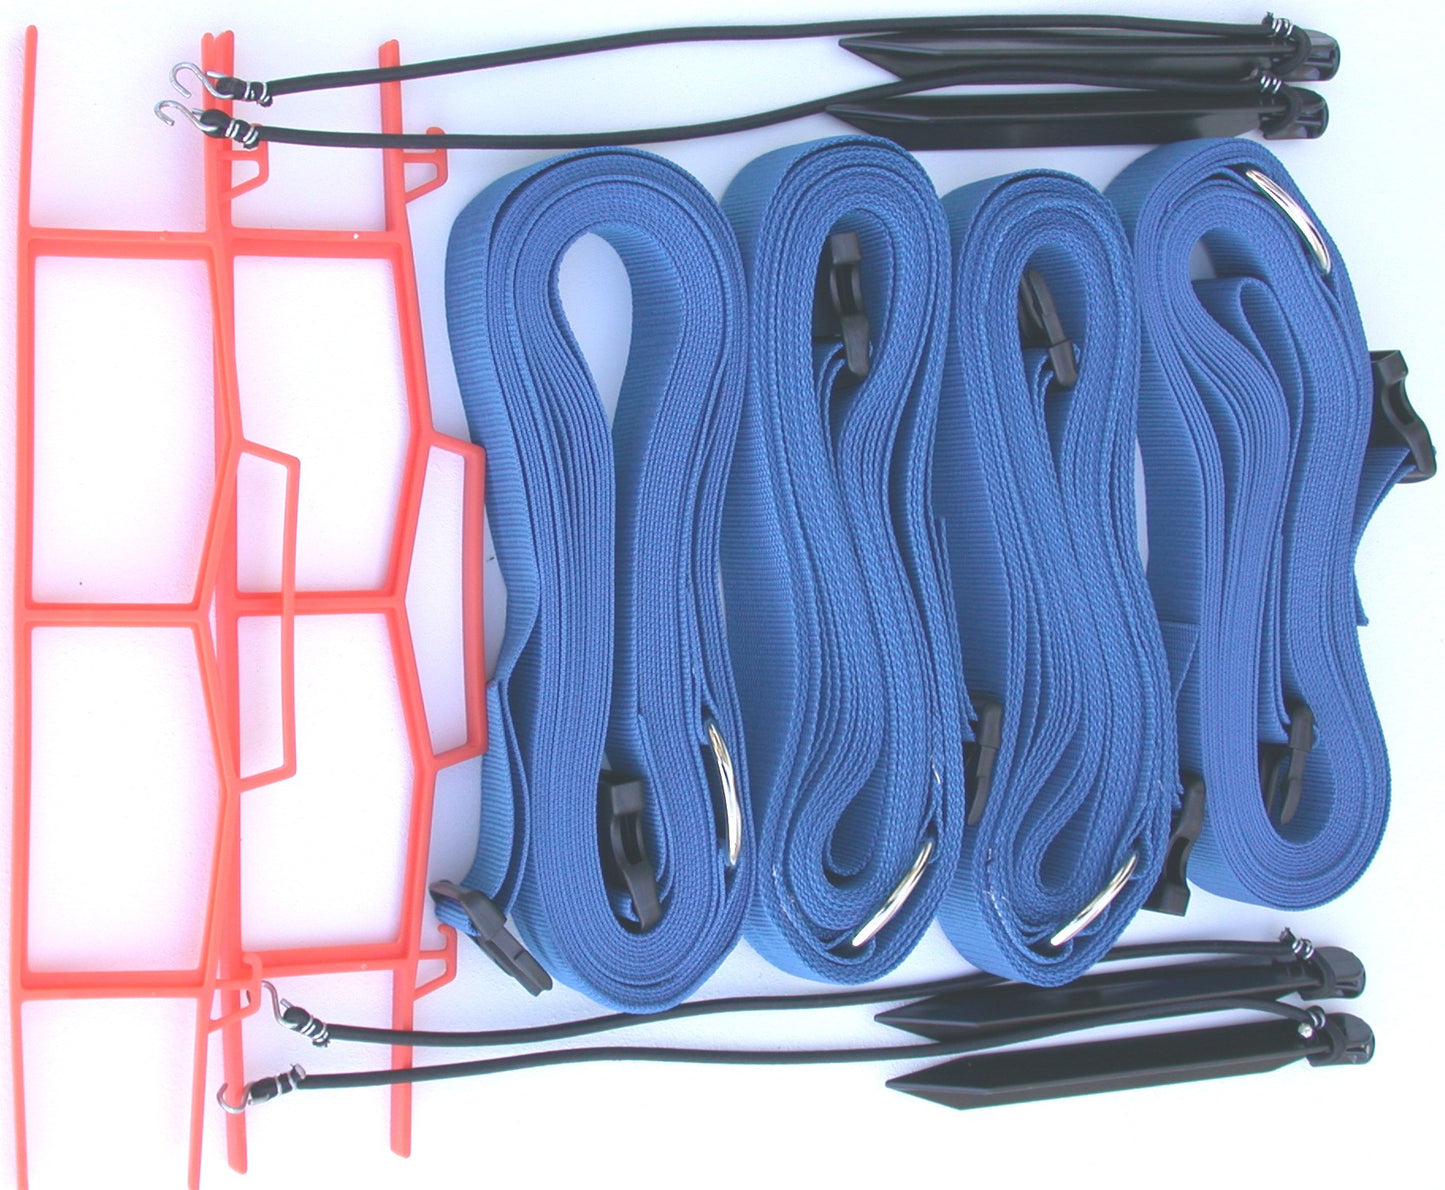 19ABUS-blue 2-inch adjustable web boundary, sand pegs, storage winders